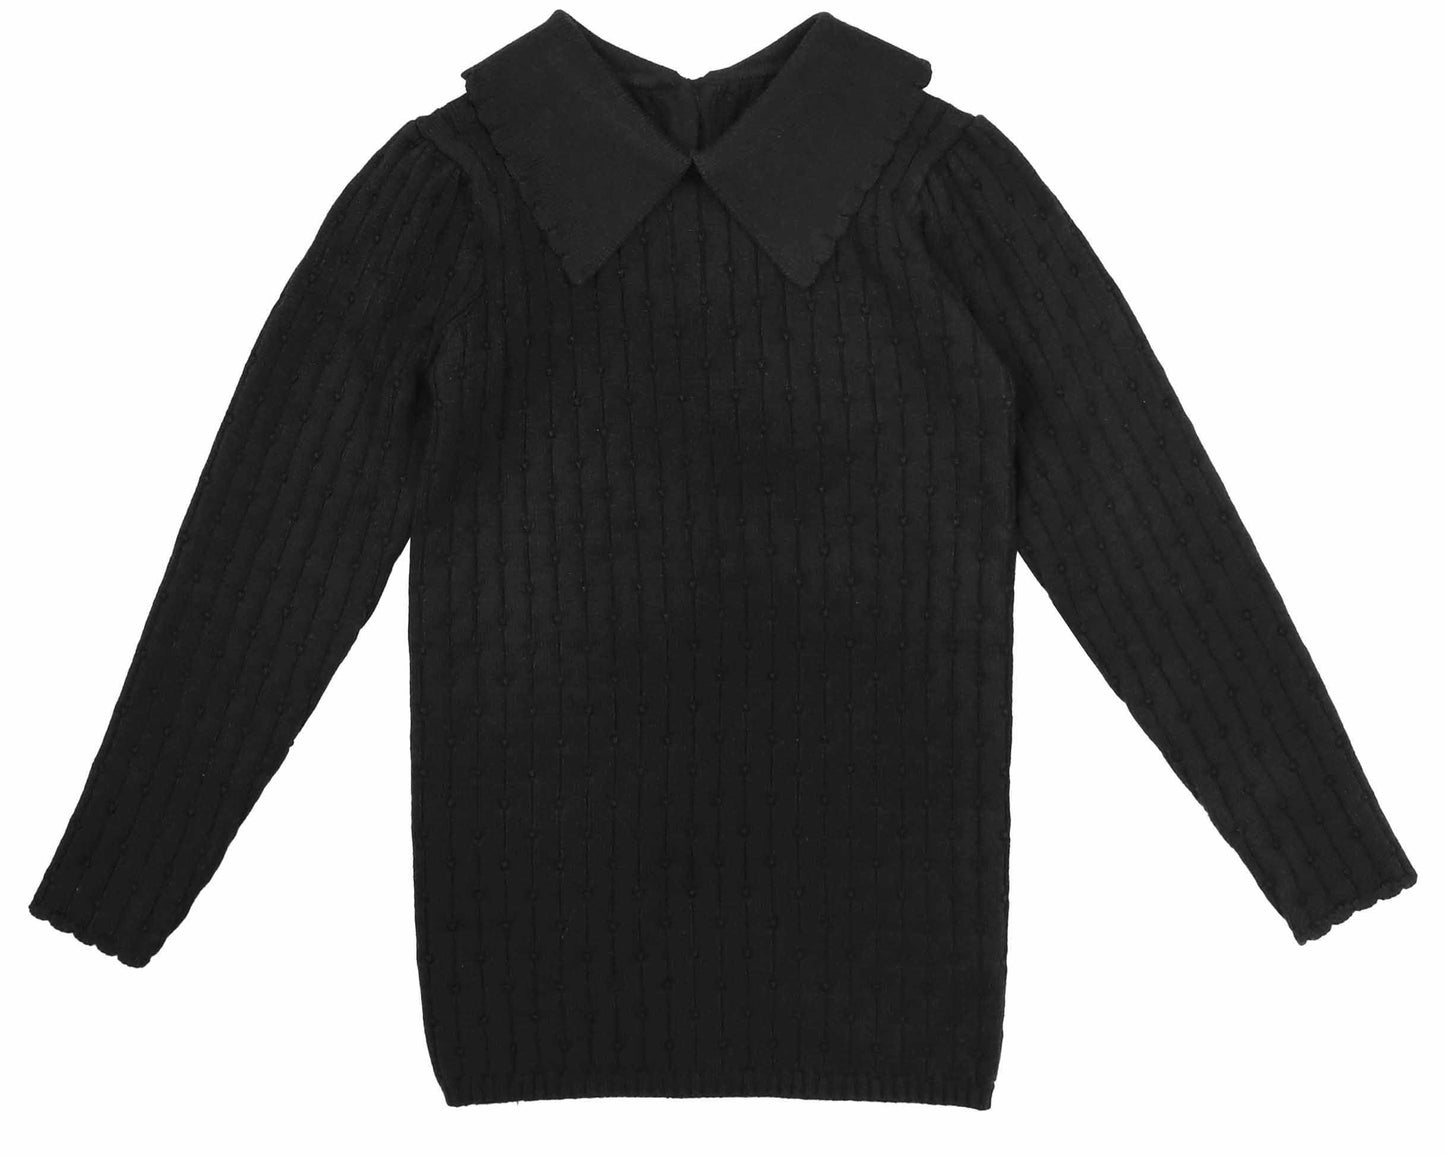 Belati Black Pointelle Knit Collared Sweater [Final Sale]